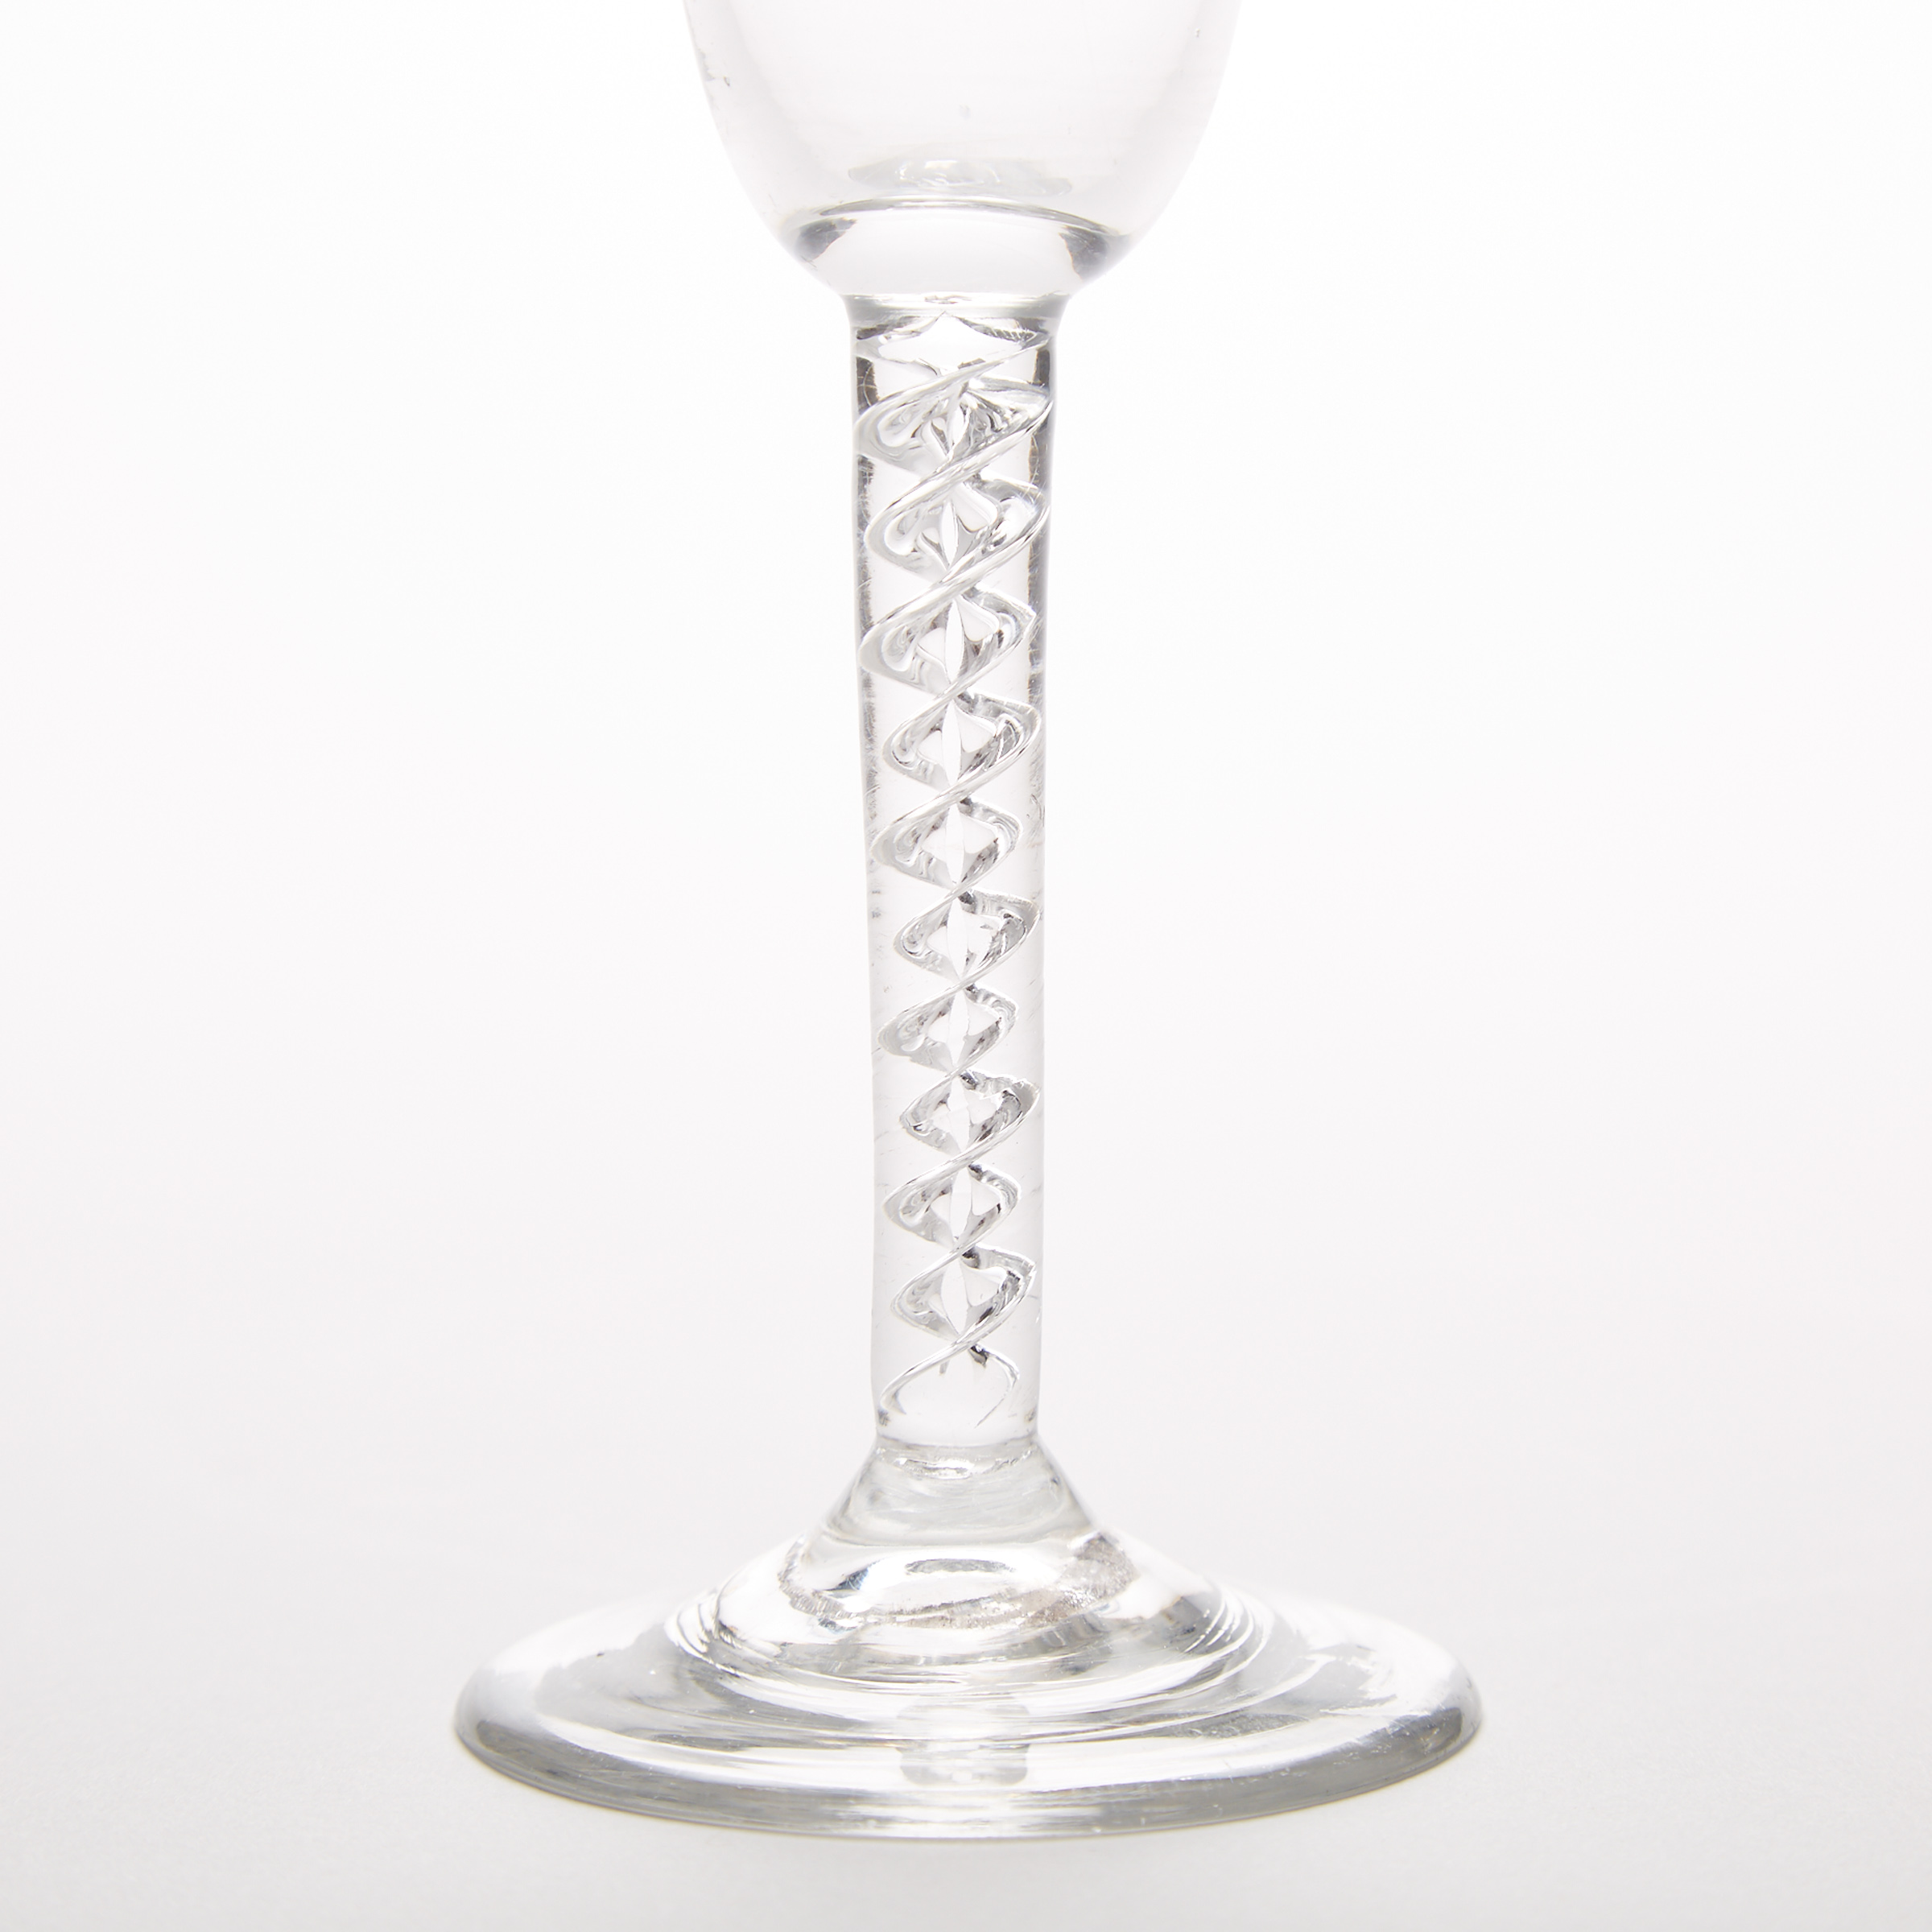 English Airtwist Stemmed Wine Glass, mid-18th century